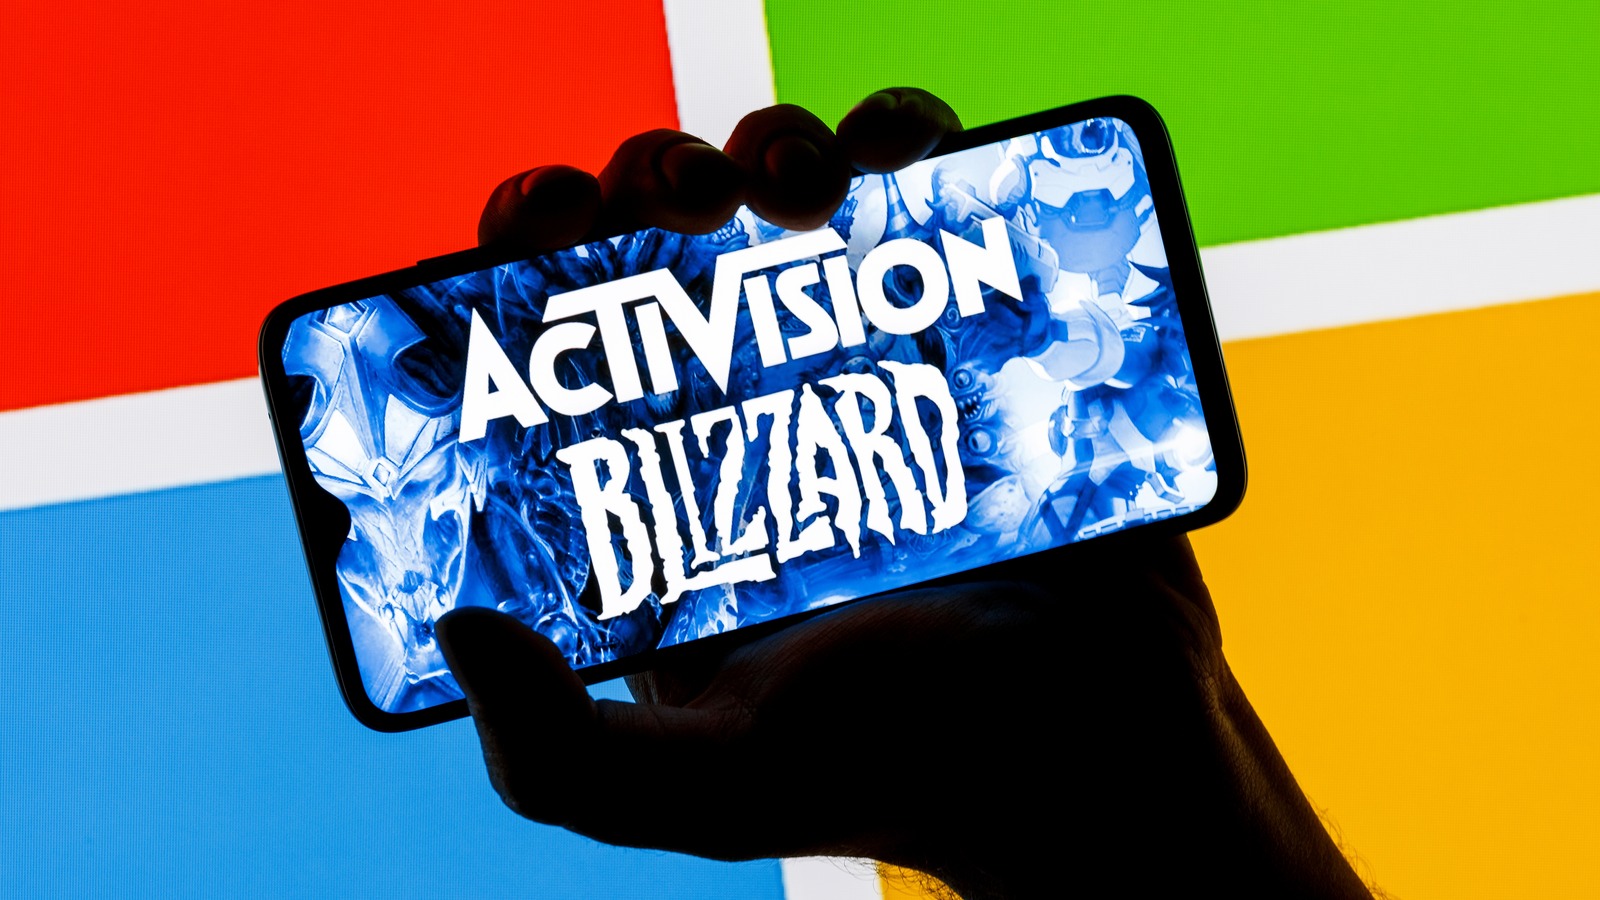 Microsoft Wins Activision Blizzard Acquisition